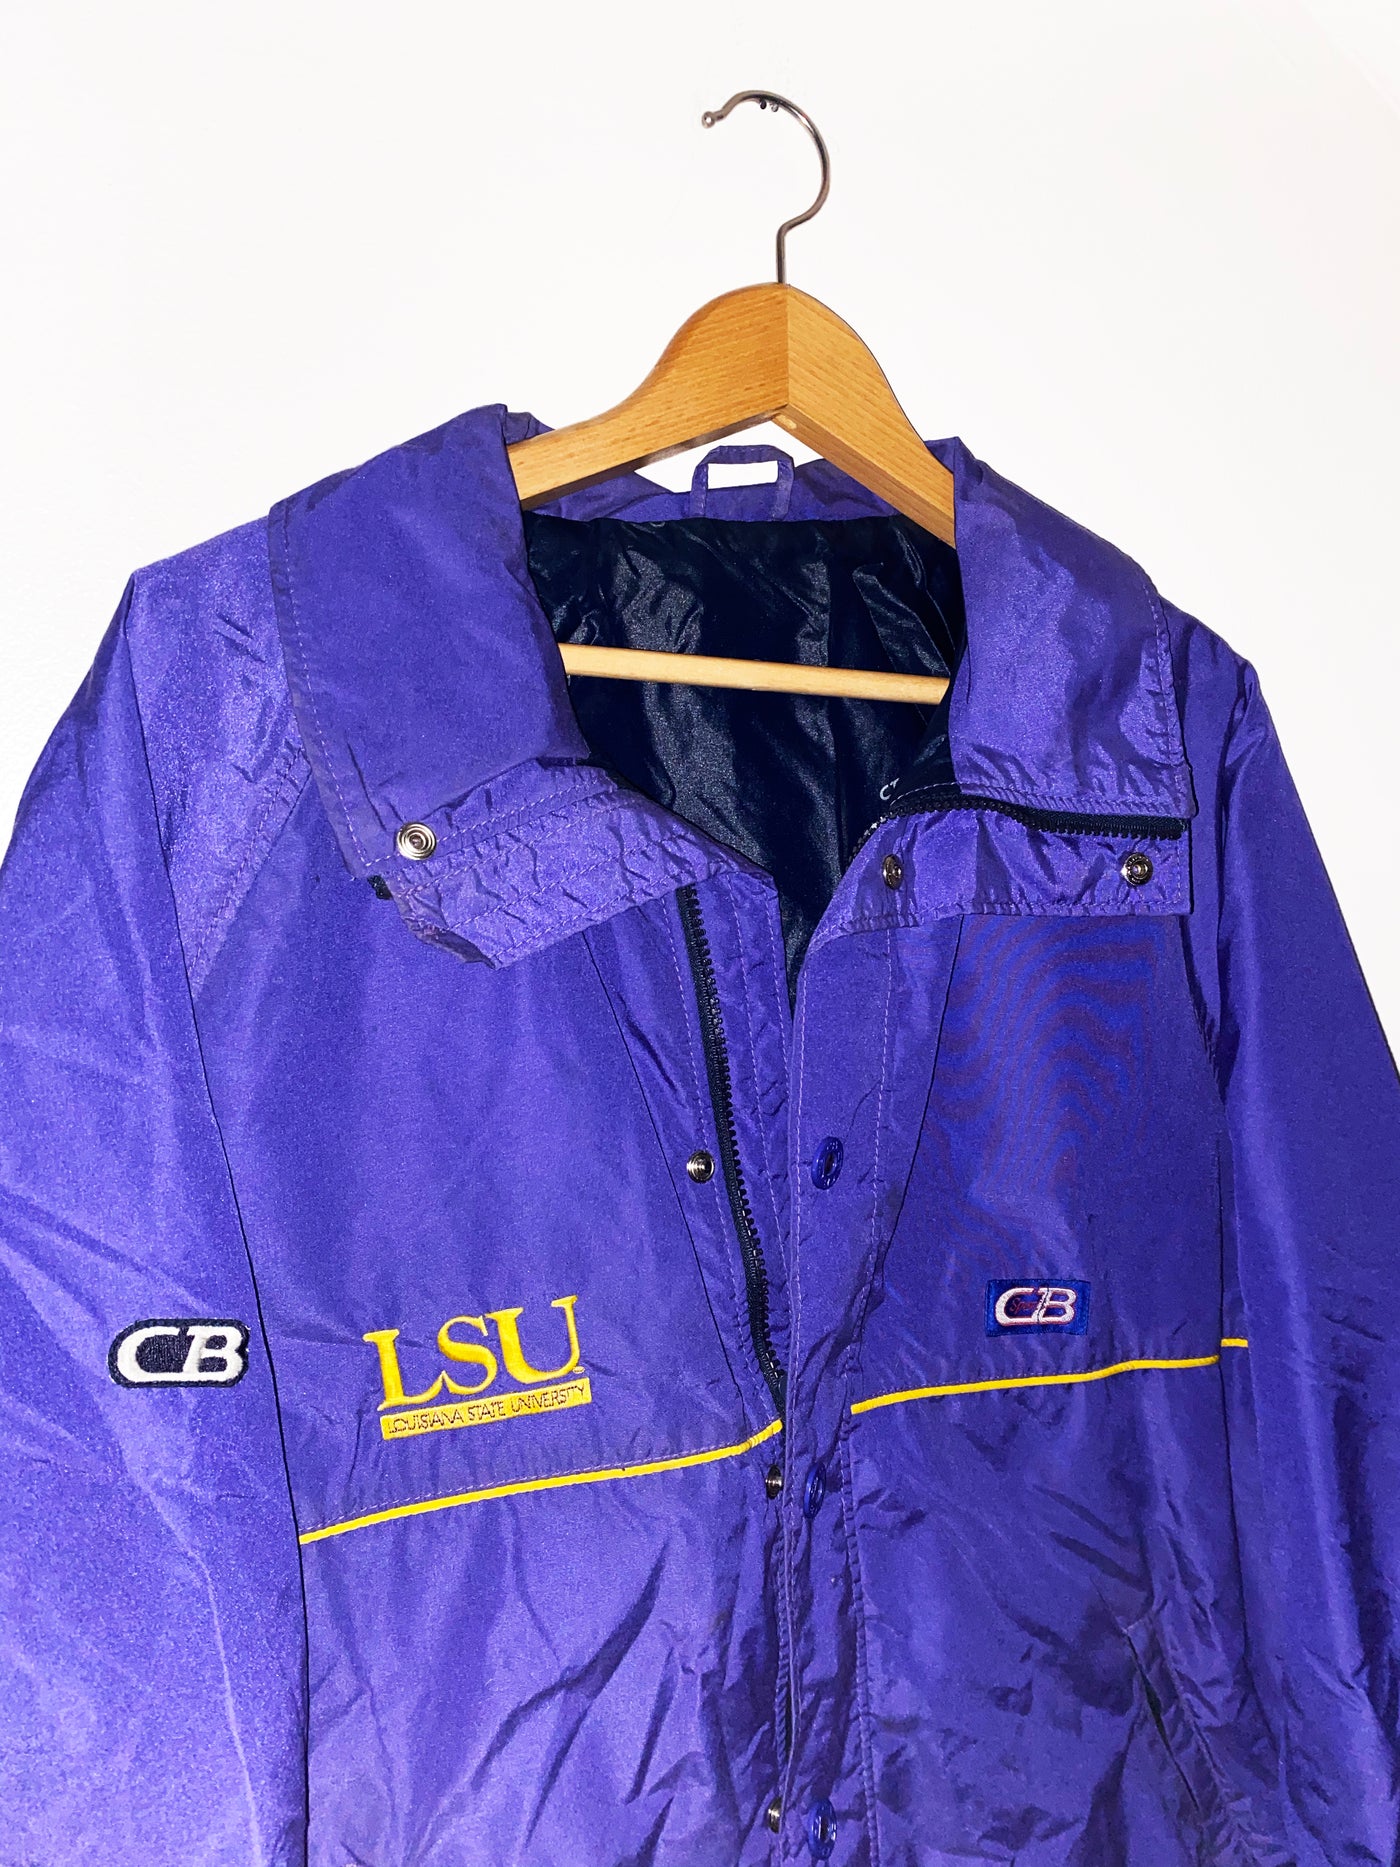 Vintage 1989 LSU Script Jacket